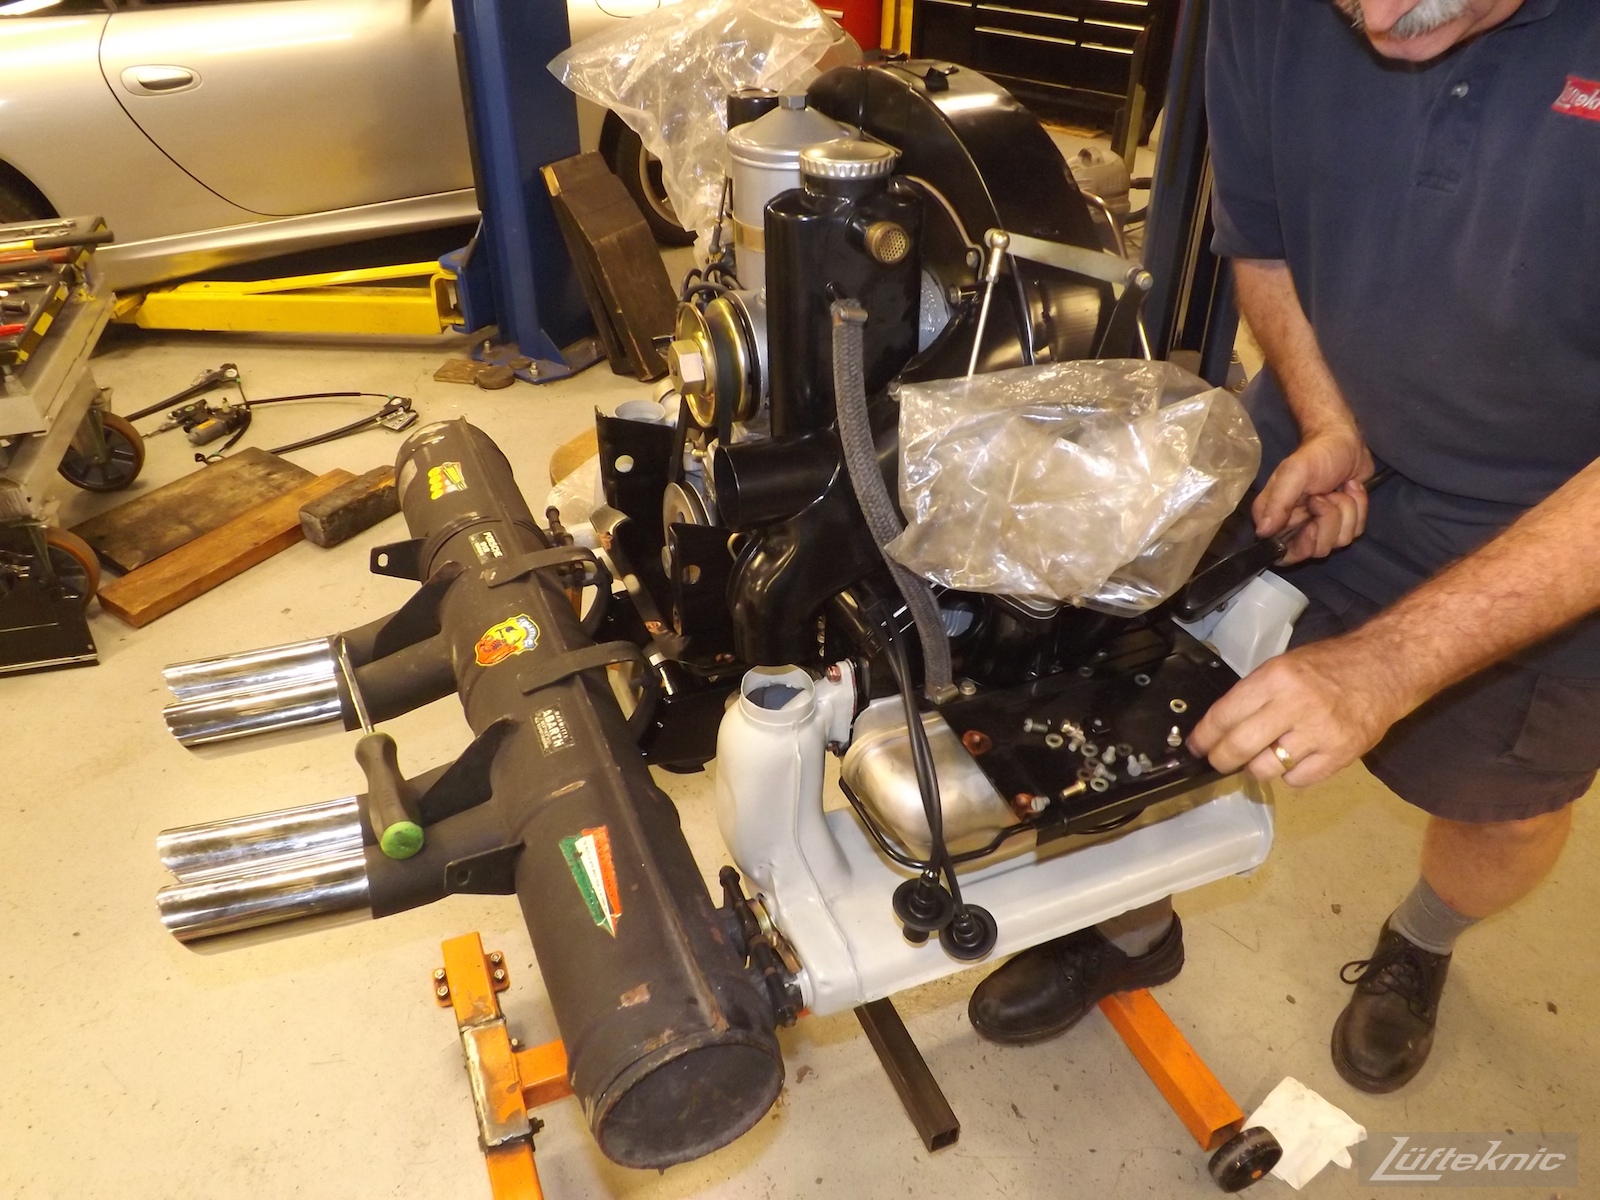 Engine ready for install for an Irish Green Porsche 912 undergoing restoration at Lufteknic.